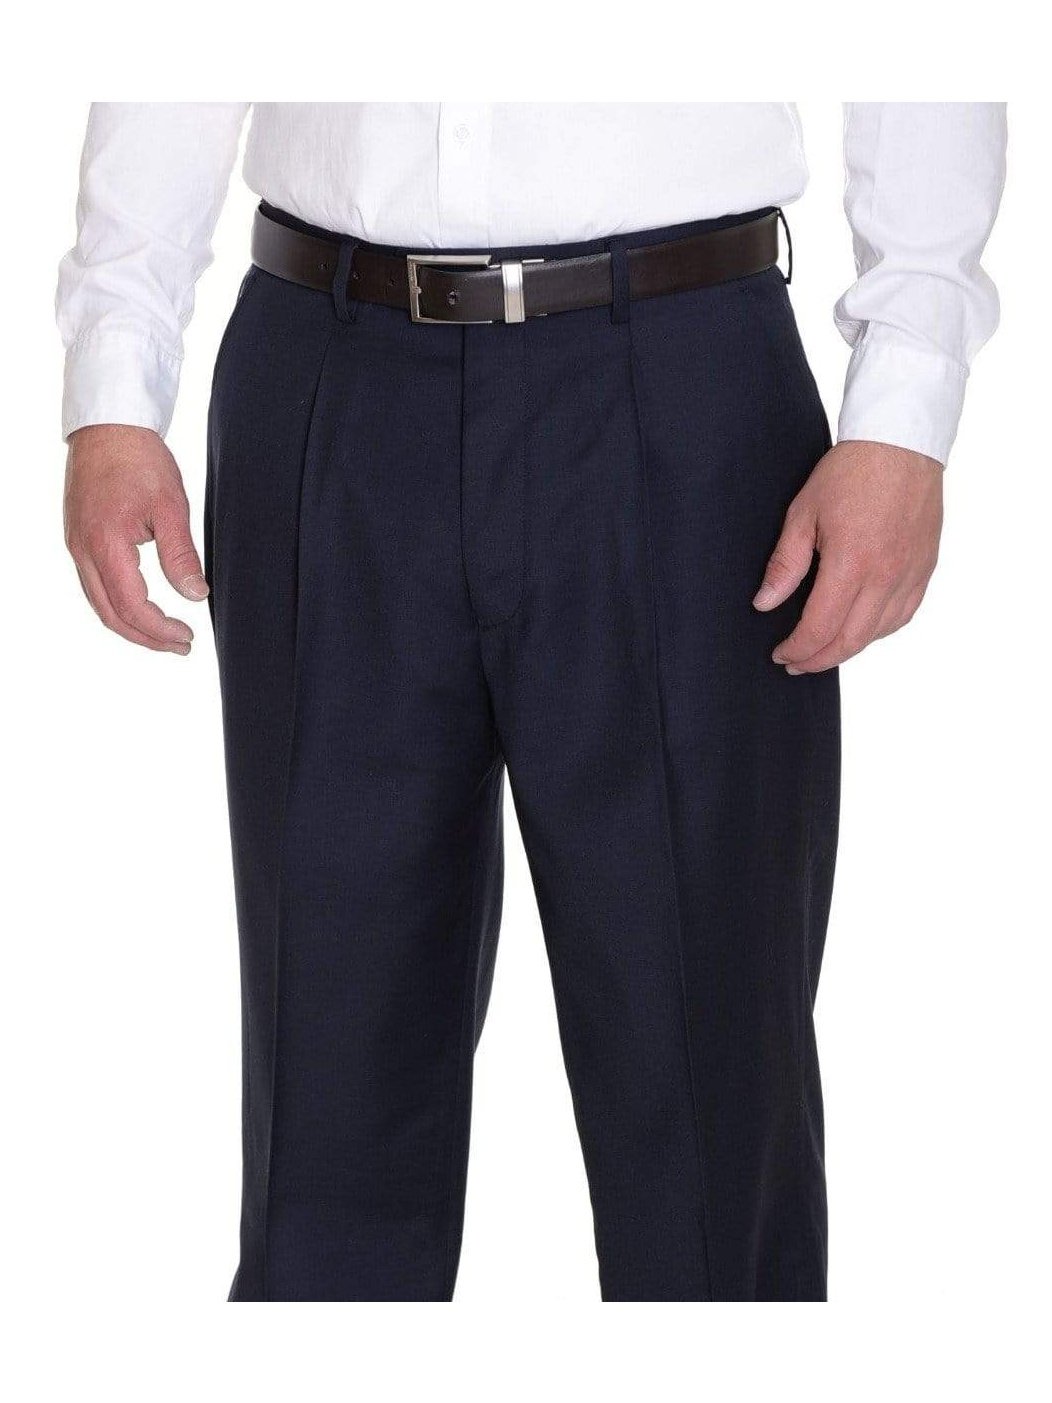 Label M PANTS 48W Solid Navy Blue Single Pleated Wrinkle Resistant Wool Dress Pants